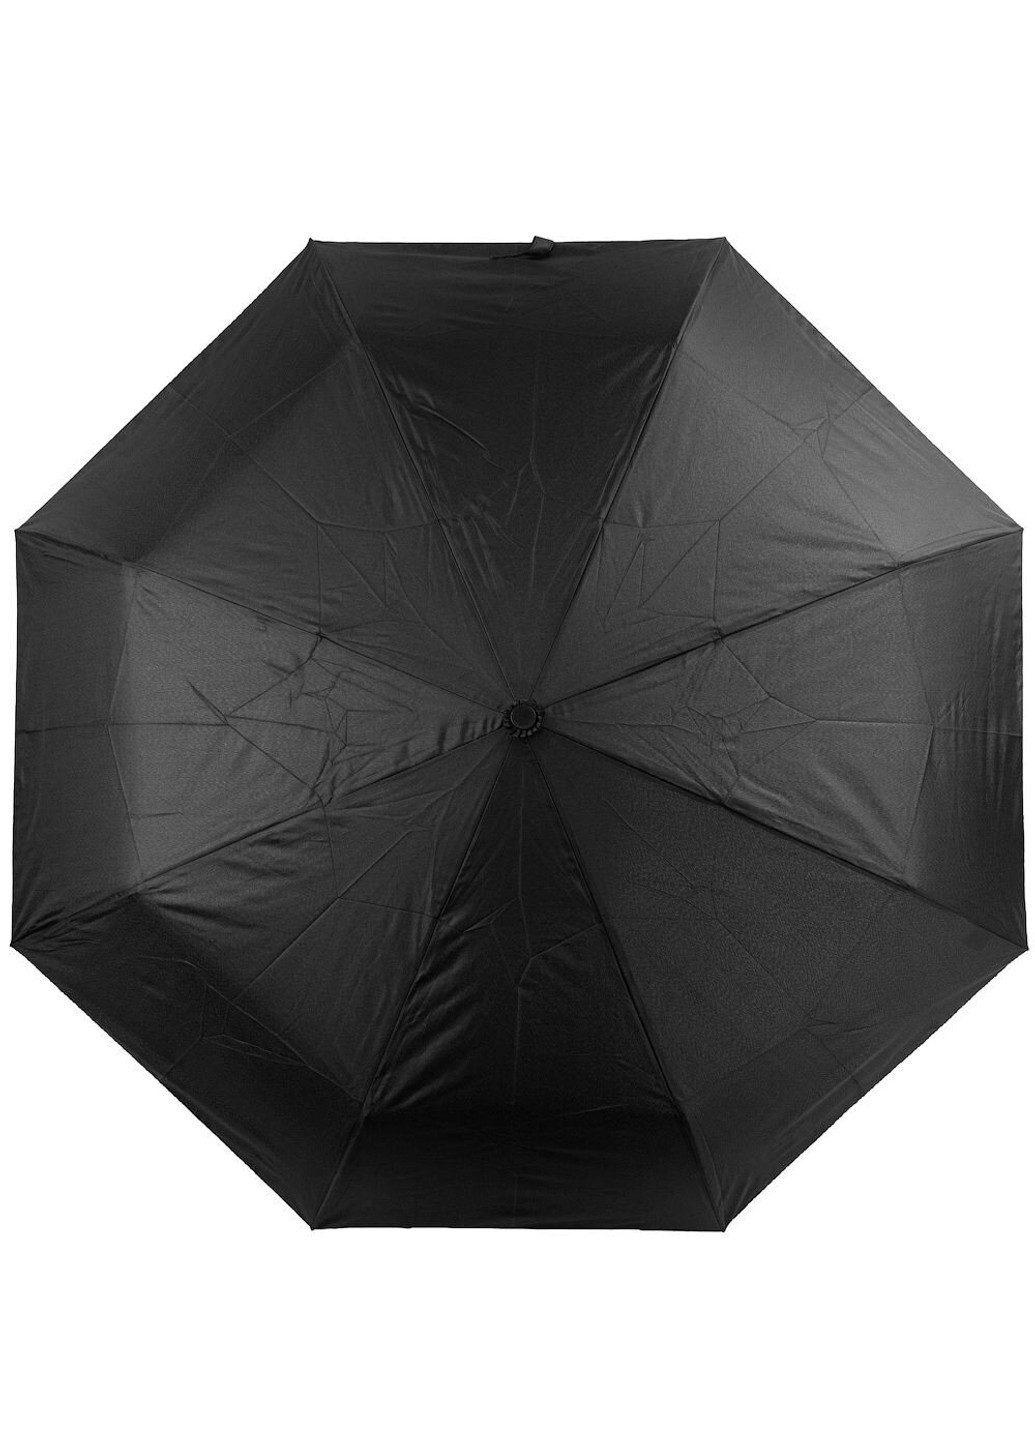 Мужской автоматический зонт ZAR3750 Art rain (263135780)